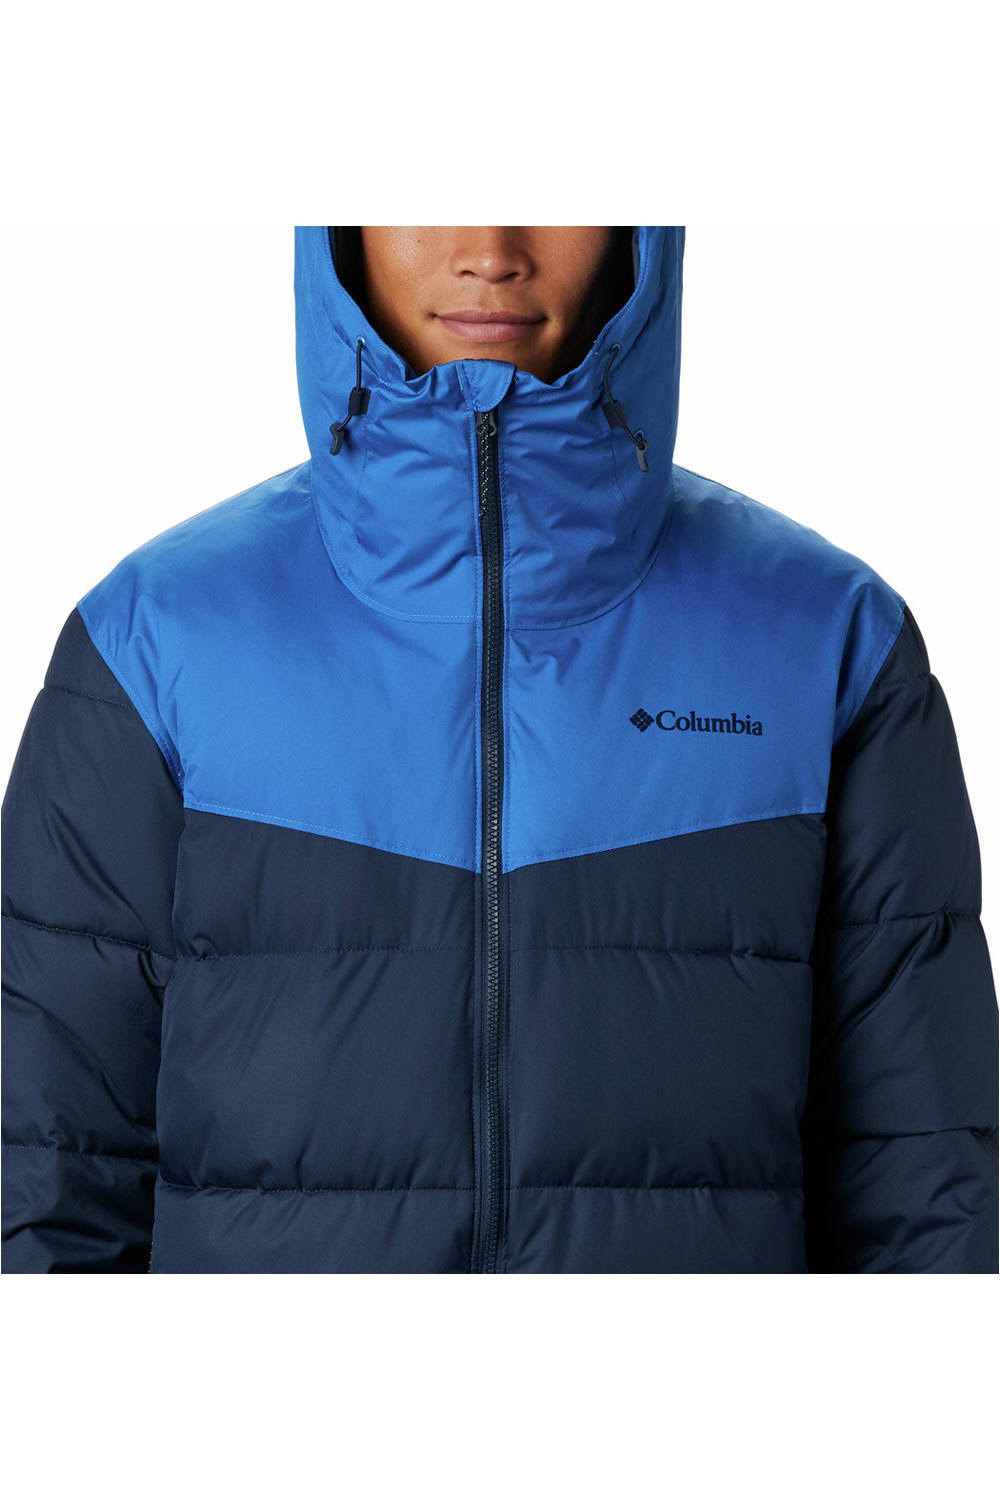 Columbia chaqueta esquí hombre ICELINE RIDGE JKT BLUE 03